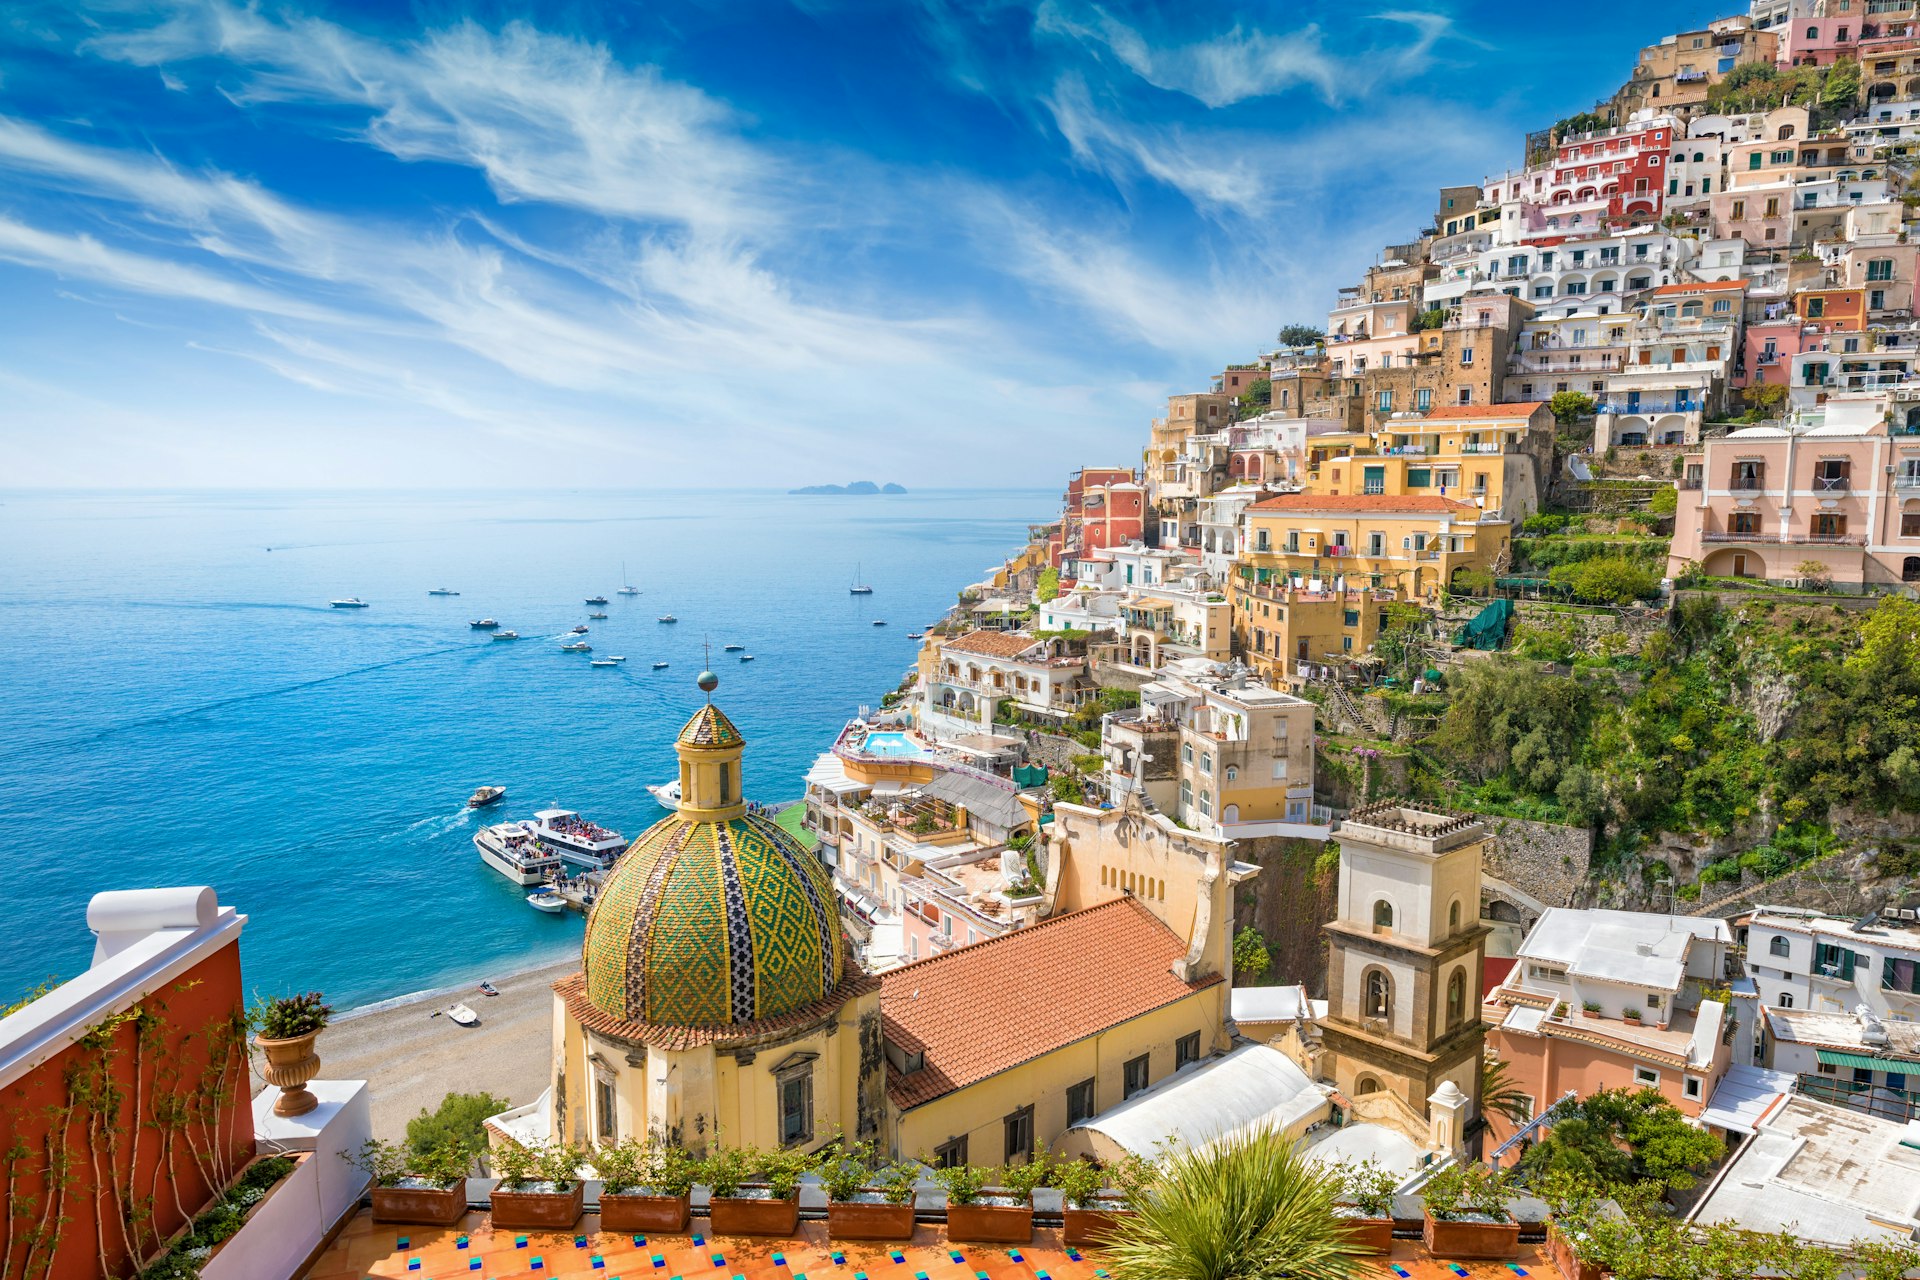 Seaside village of Positano on the Amalfi Coast